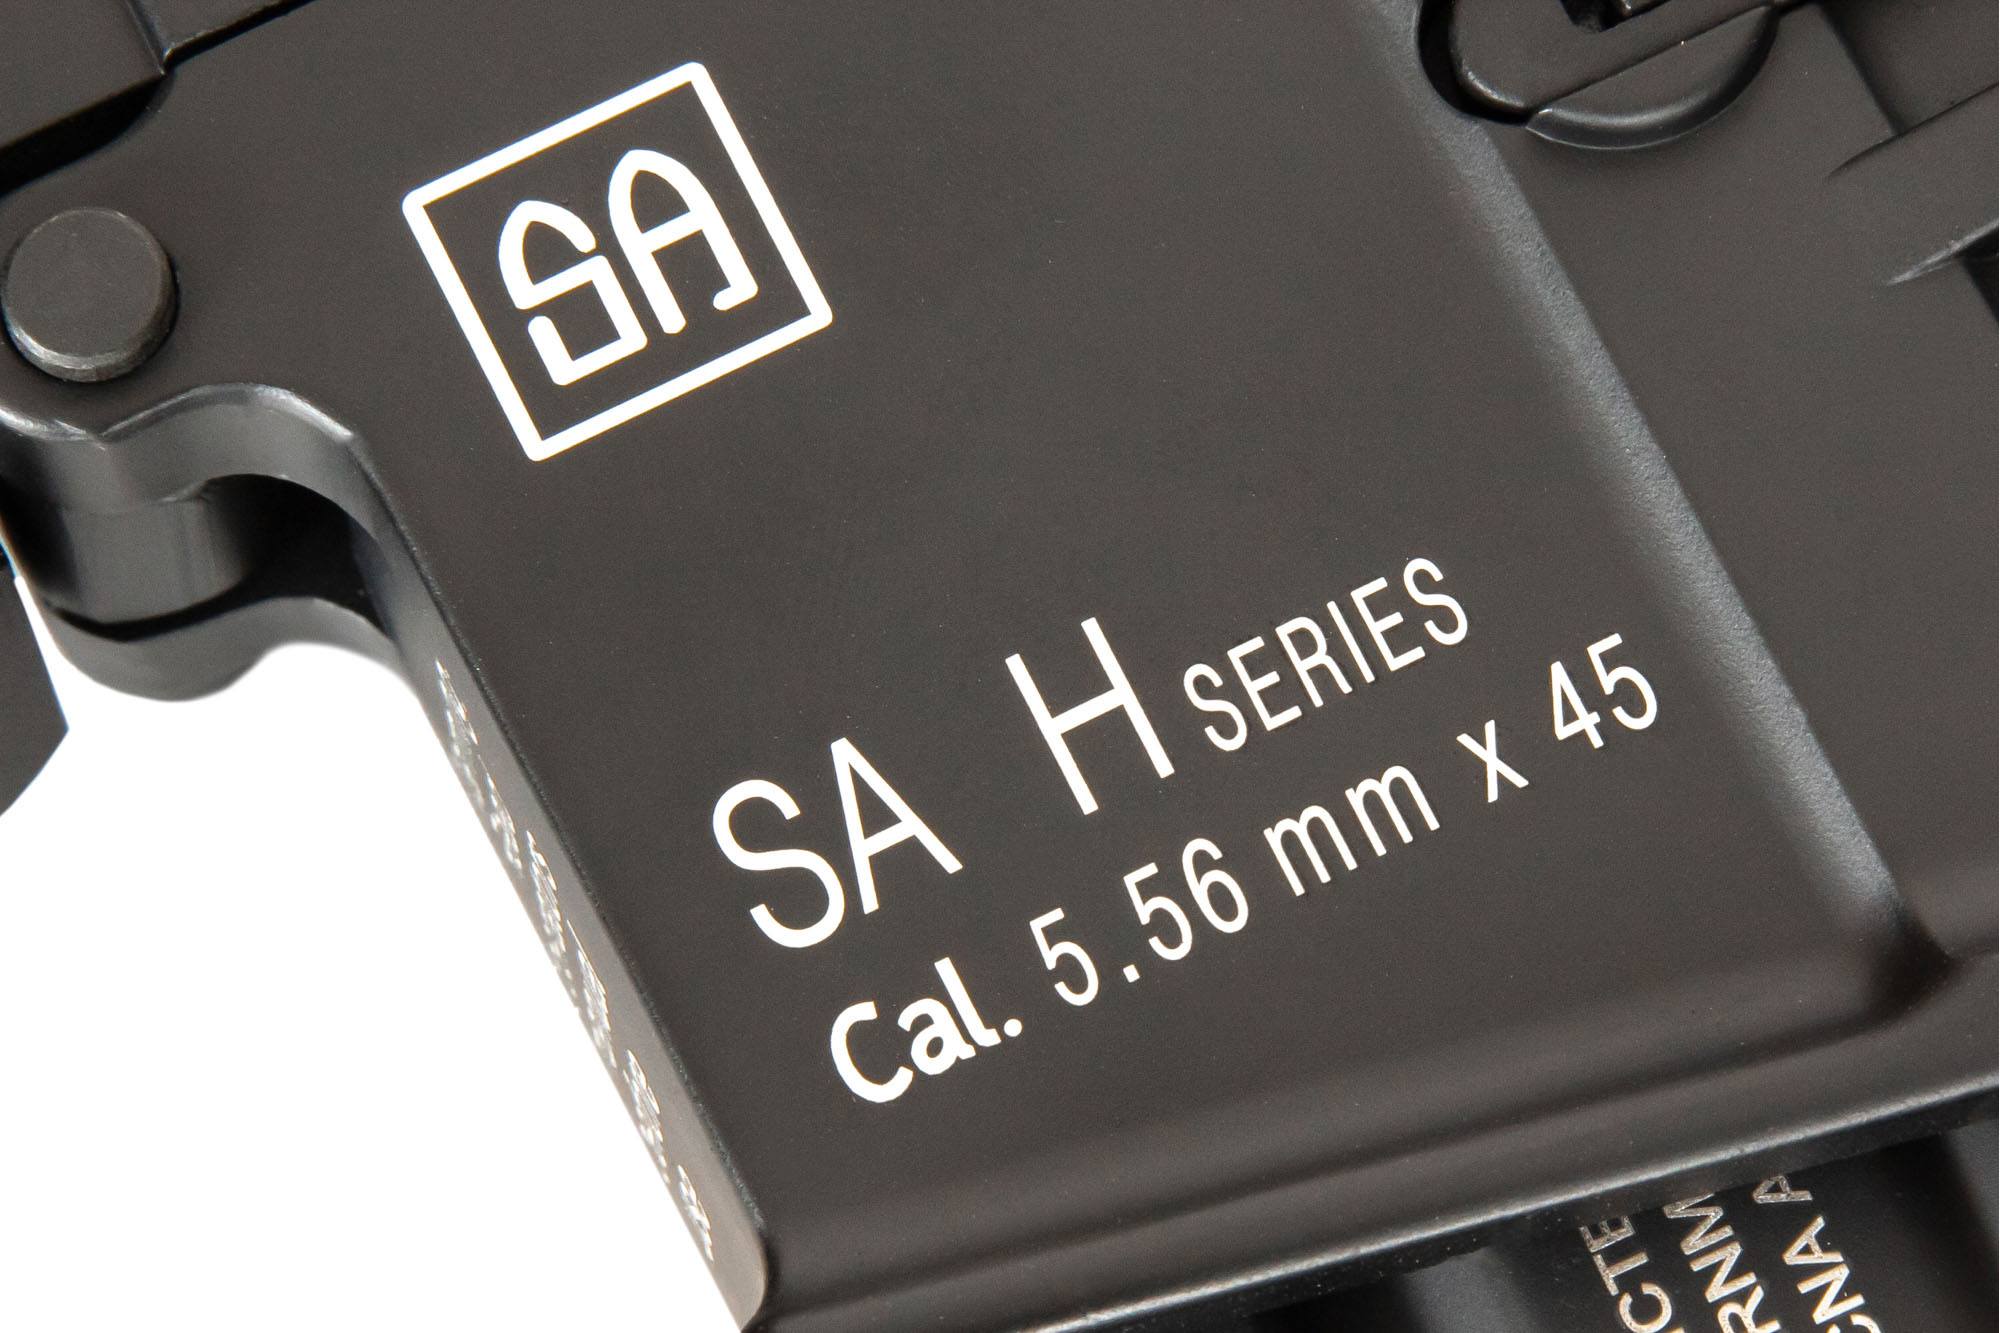 SA-ONE ™ H11 carbine replica - black by Specna Arms on Airsoft Mania Europe